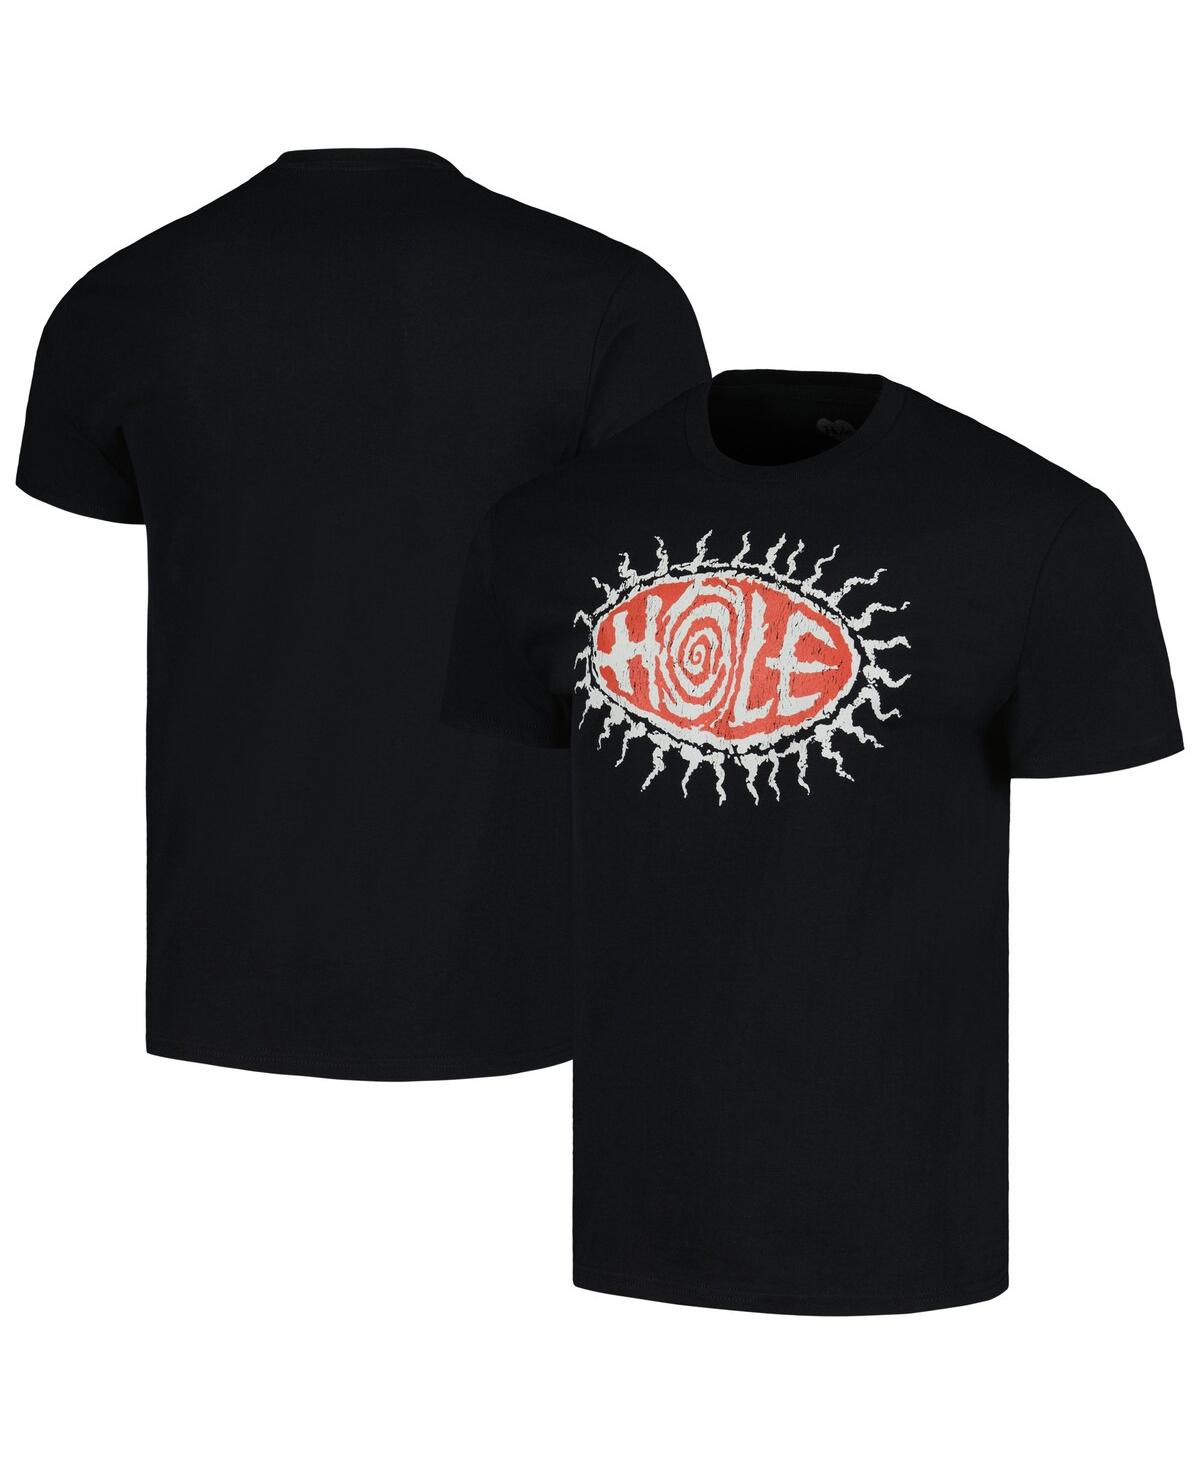 Men's Manhead Merch Black Hole Eyeball Graphic T-shirt - Black